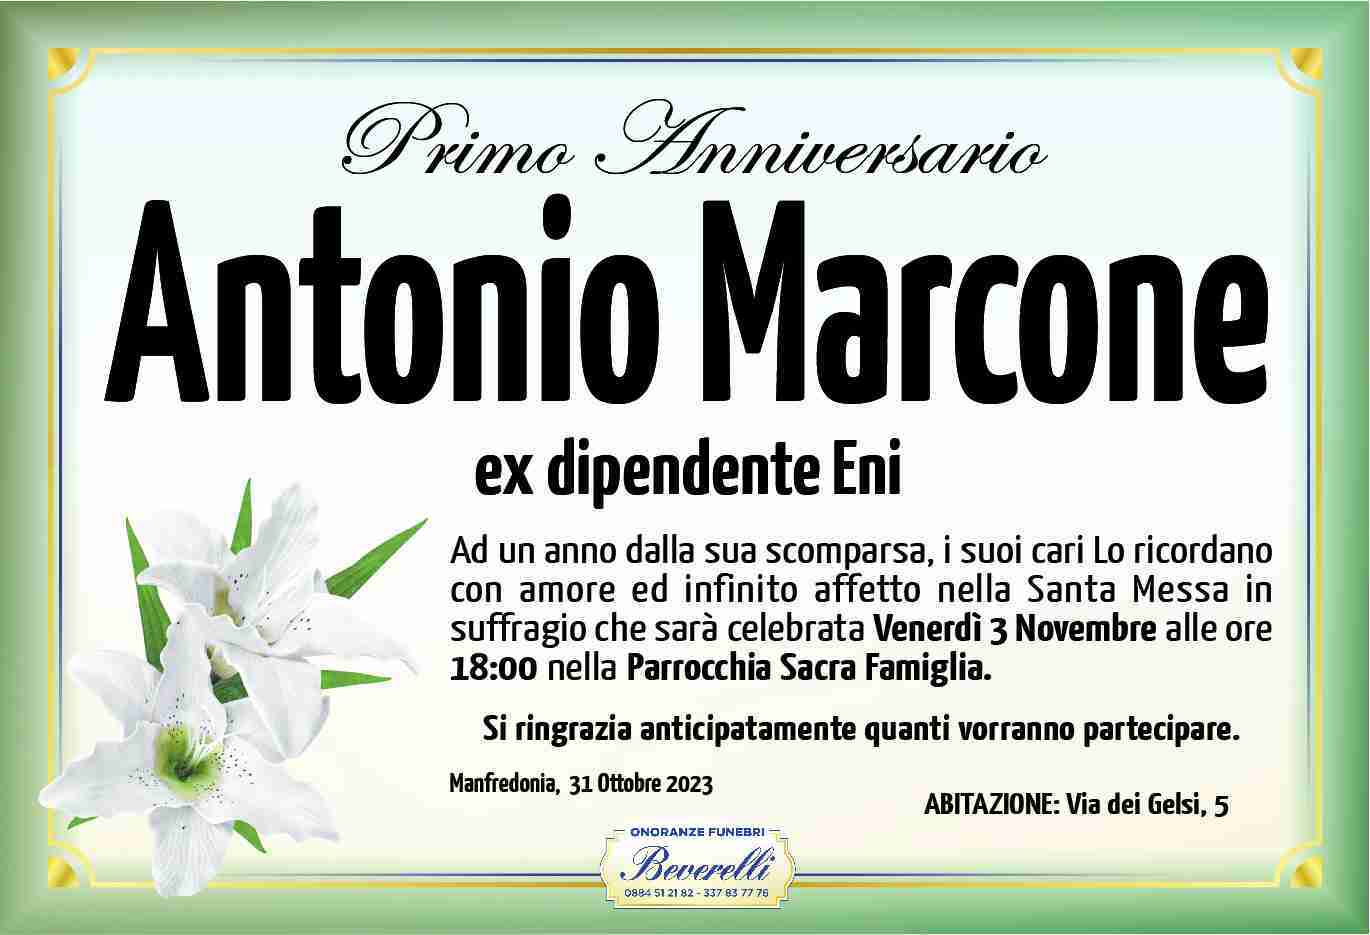 Antonio Marcone